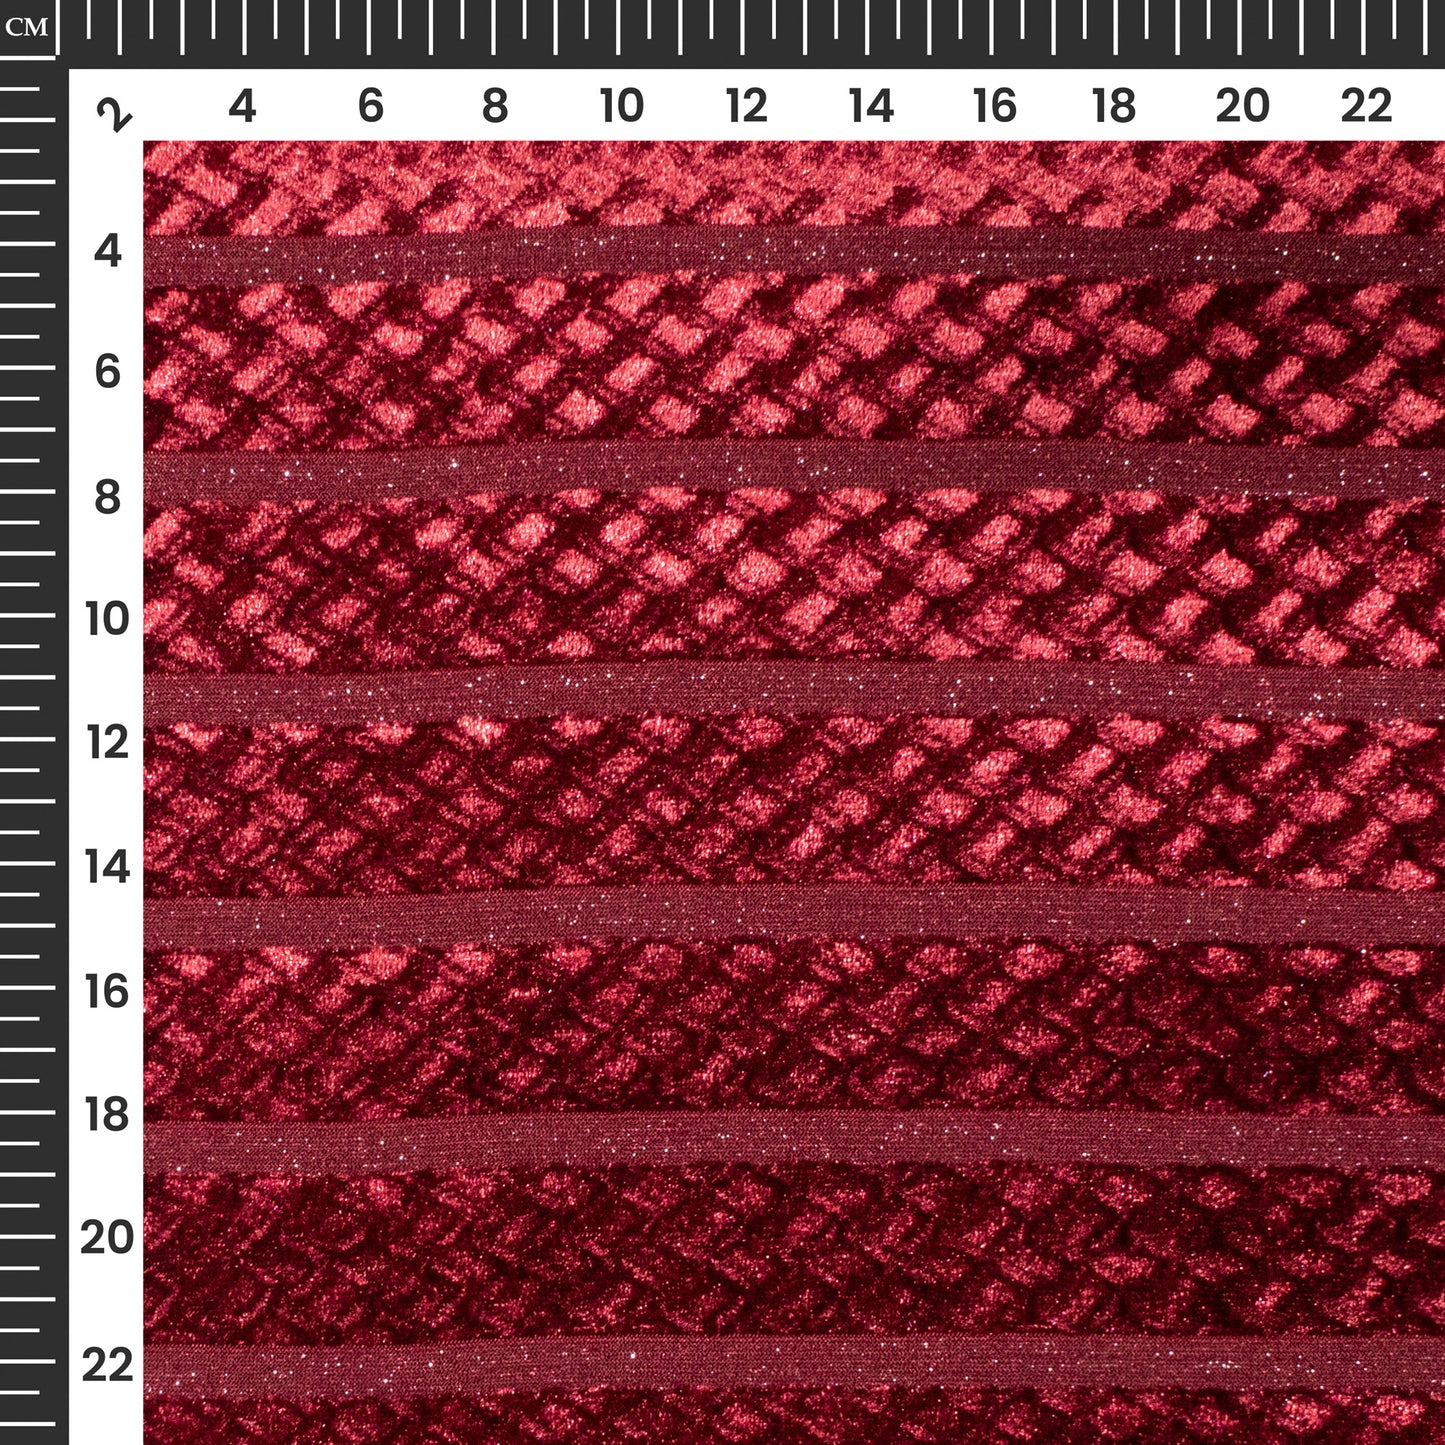 Stunning Geometric Stripes Luxurious Imported Velvet Fabric